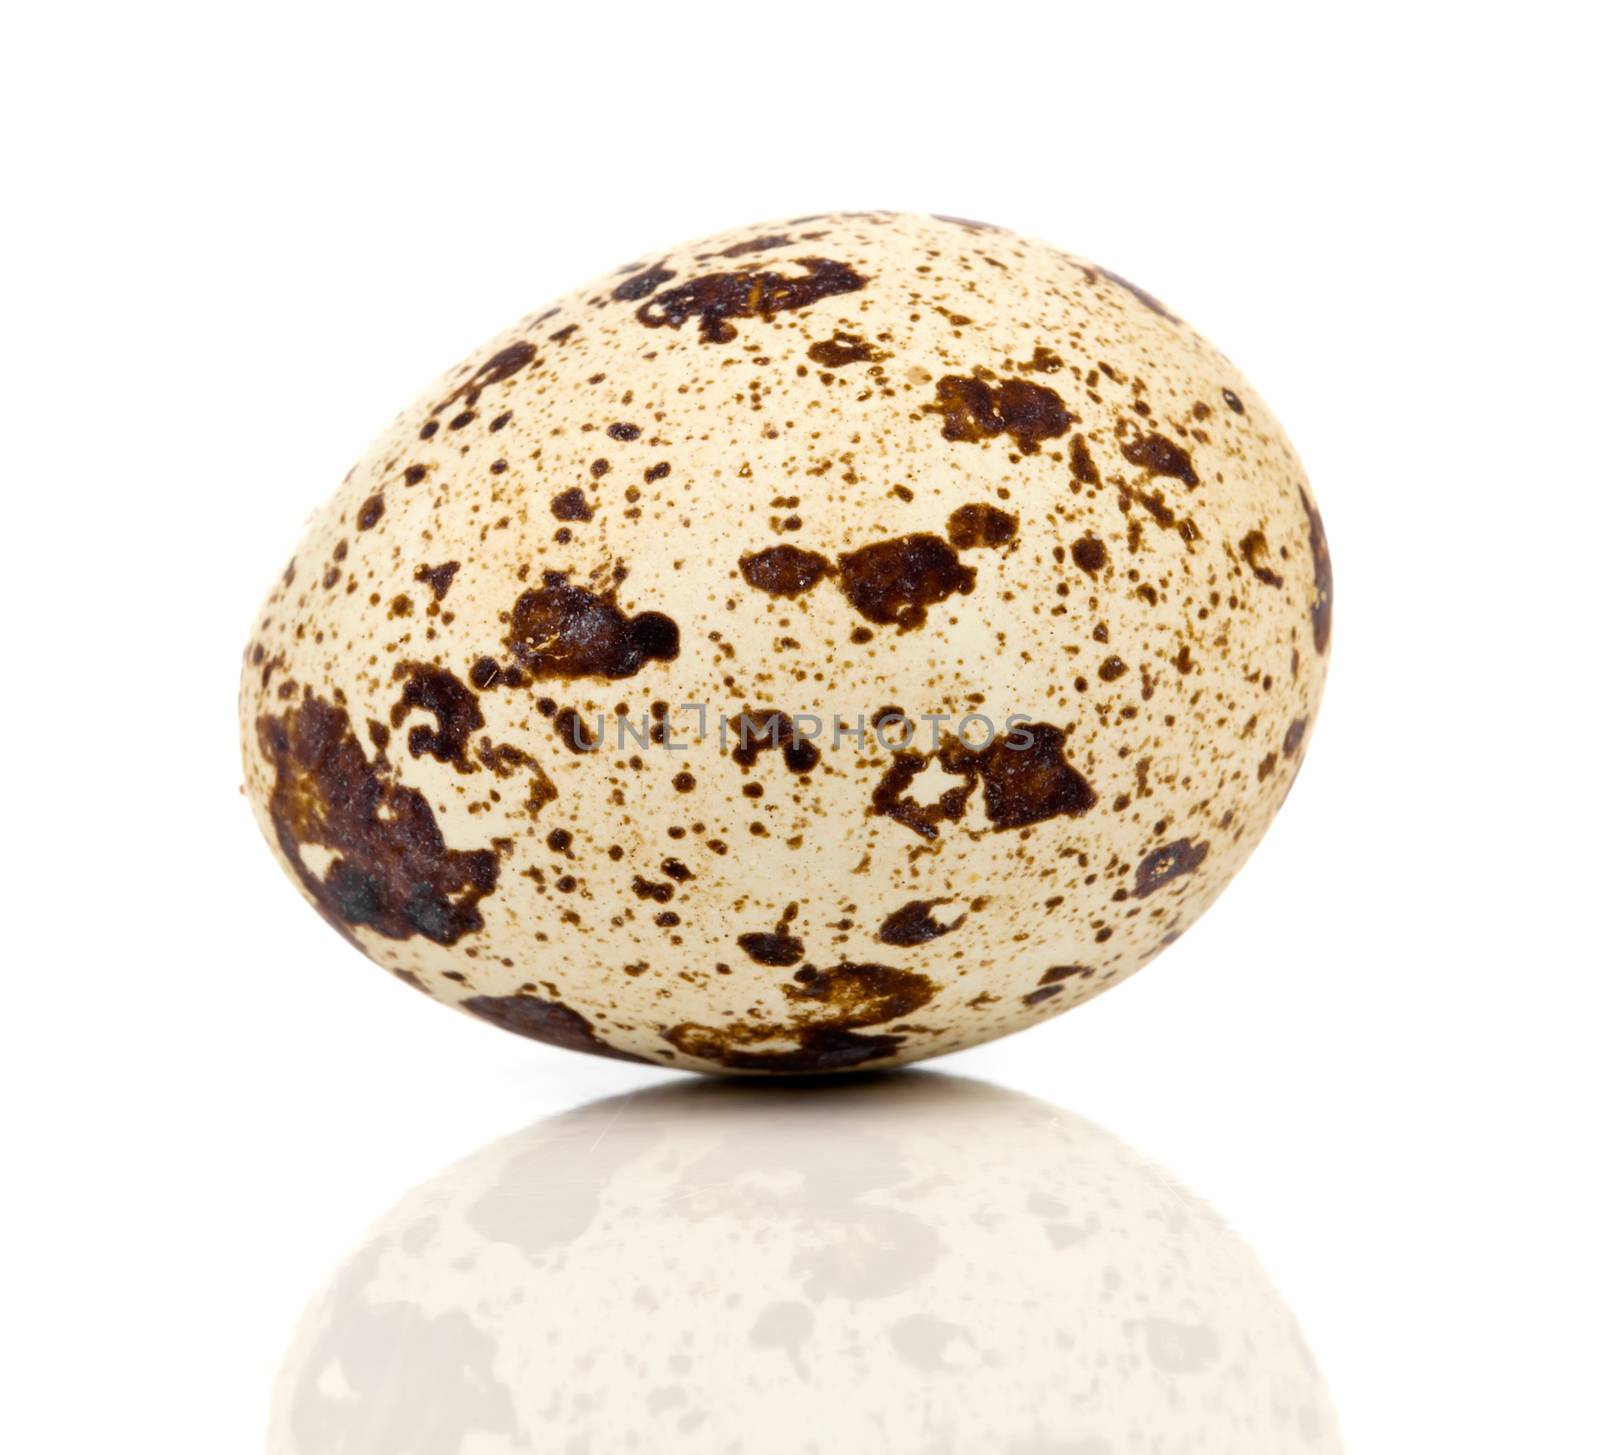 One quail egg. Isolated on white background by motorolka